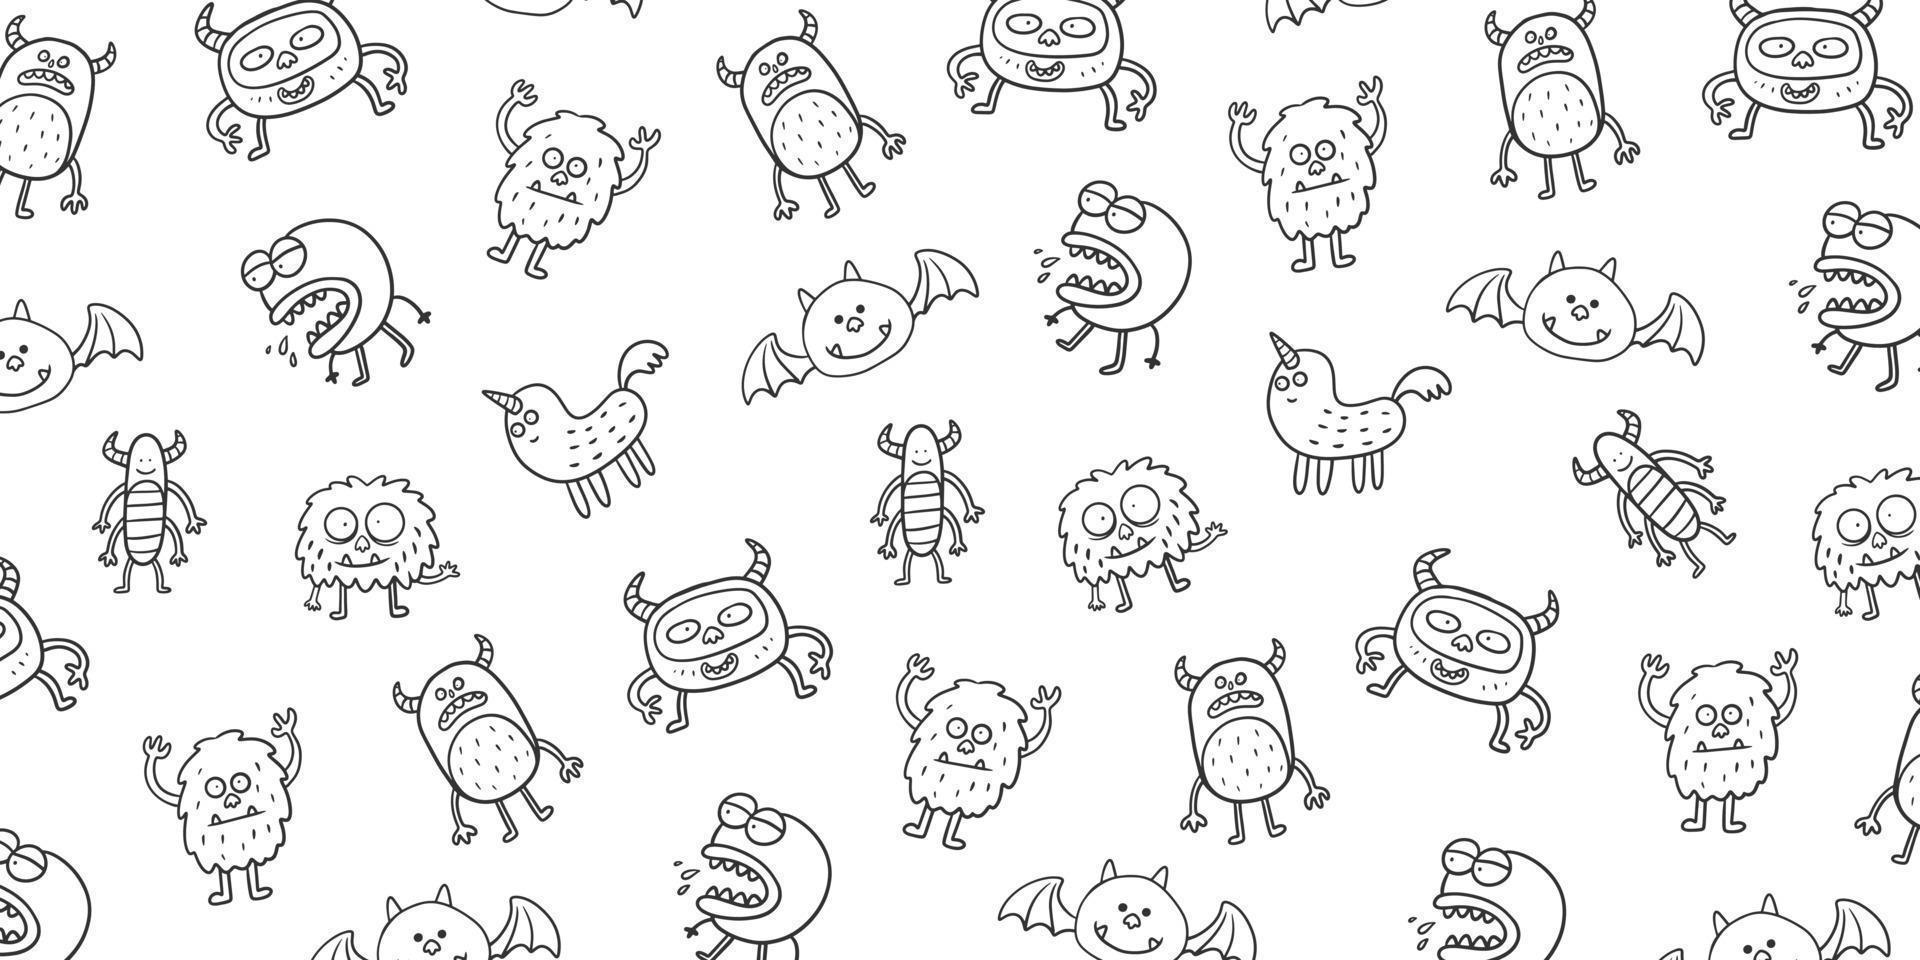 Cute Monster hand drawn pattern illustration background design vector